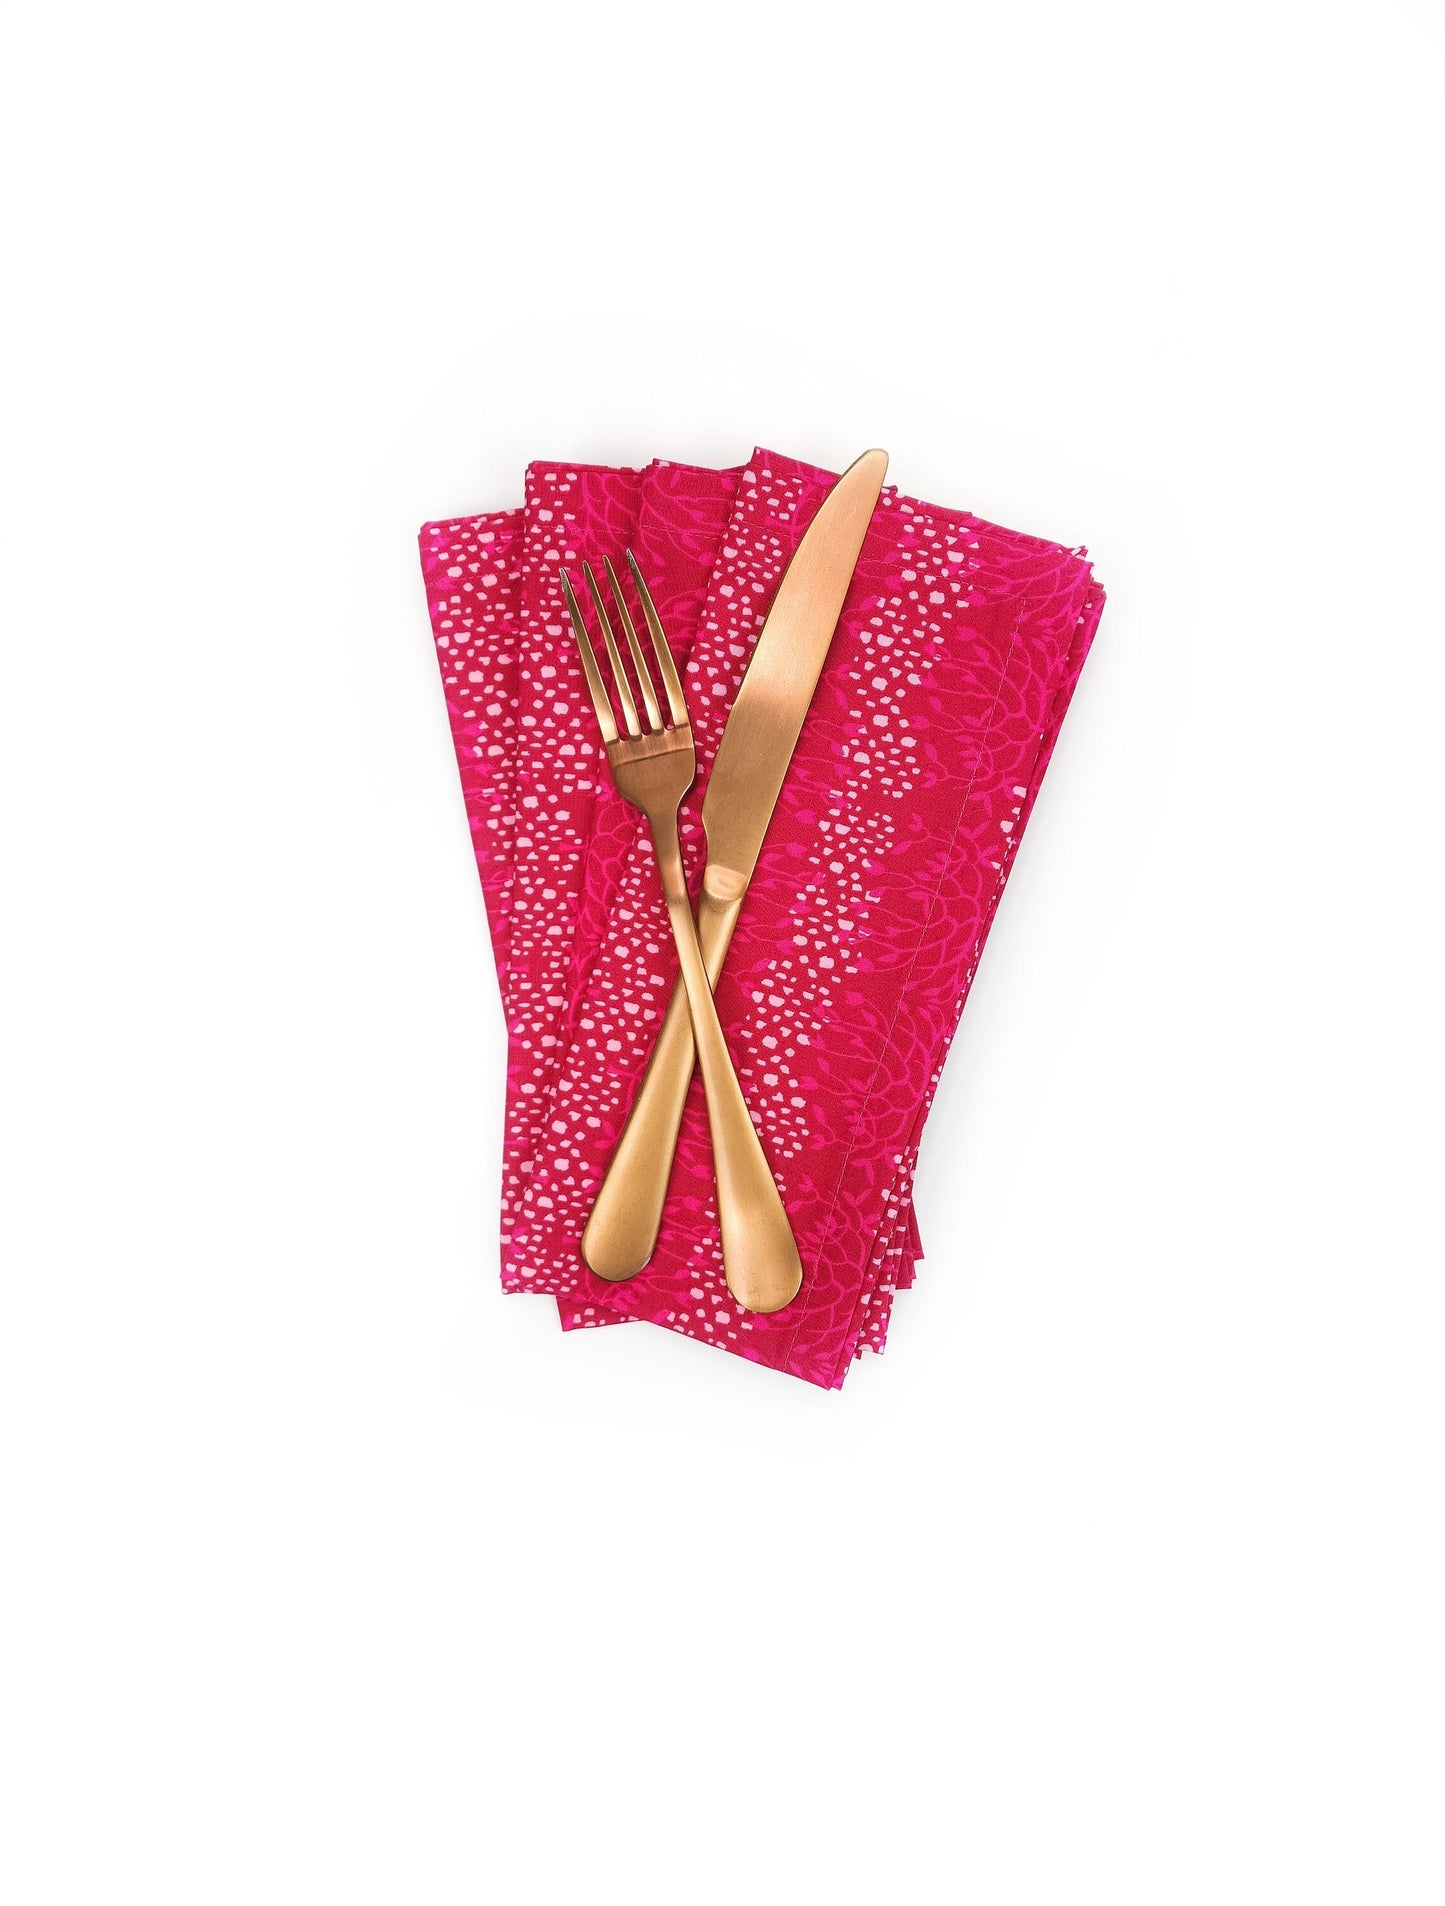 Raspberry Pink Cotton Cloth Napkins, Set of 4 Cloth Napkins